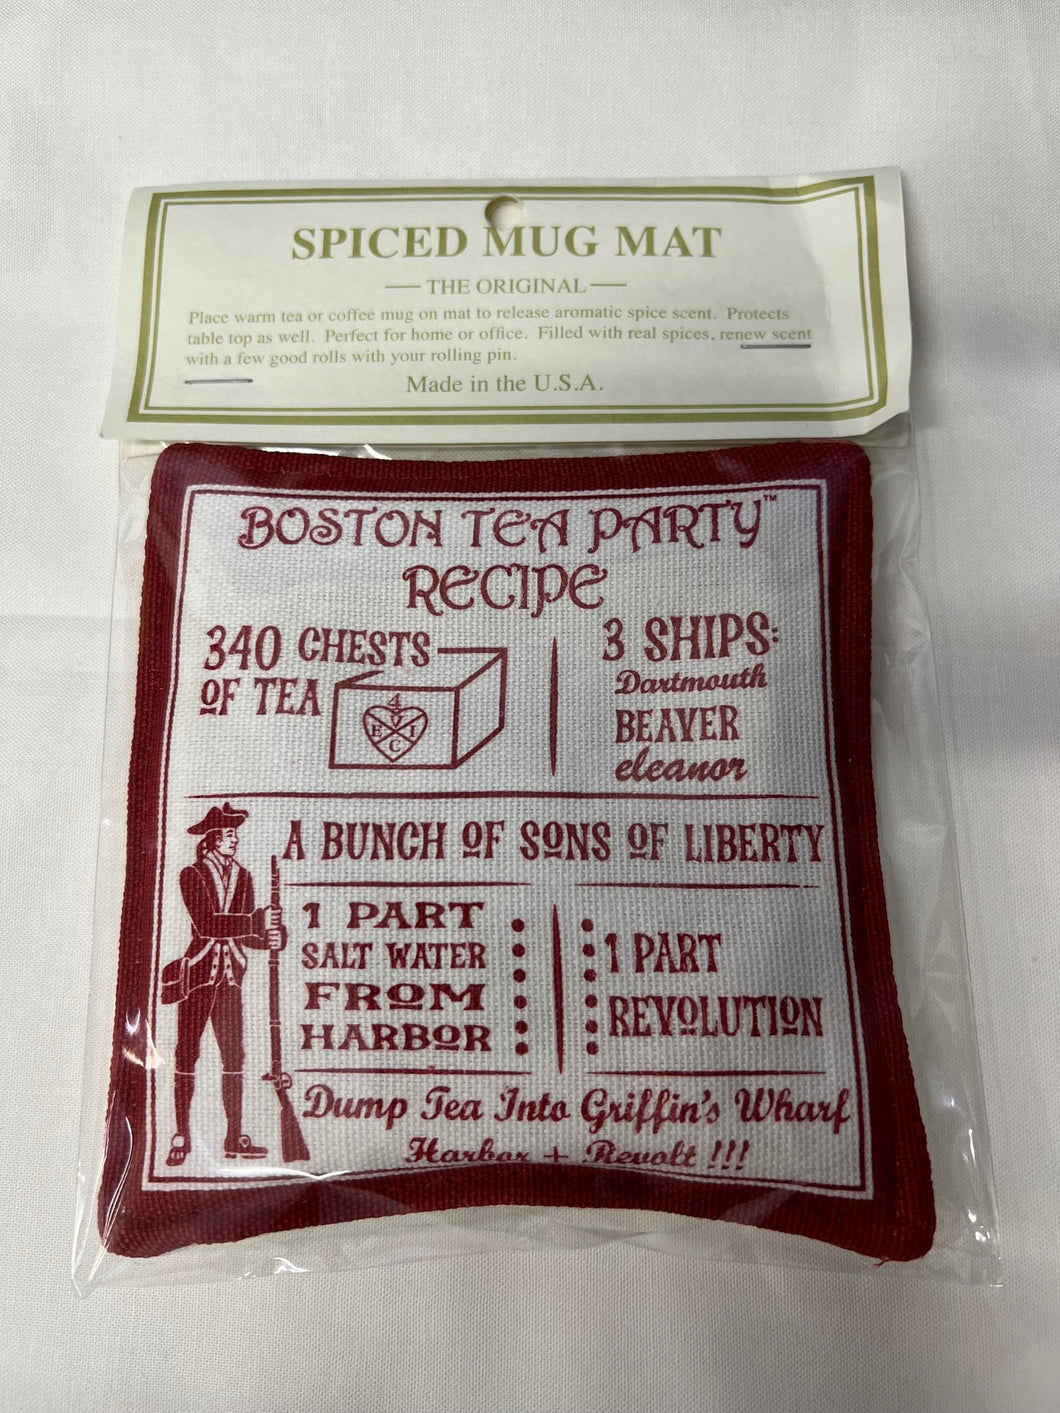 The Recipe for a Boston Tea Party Spiced Mug Mat